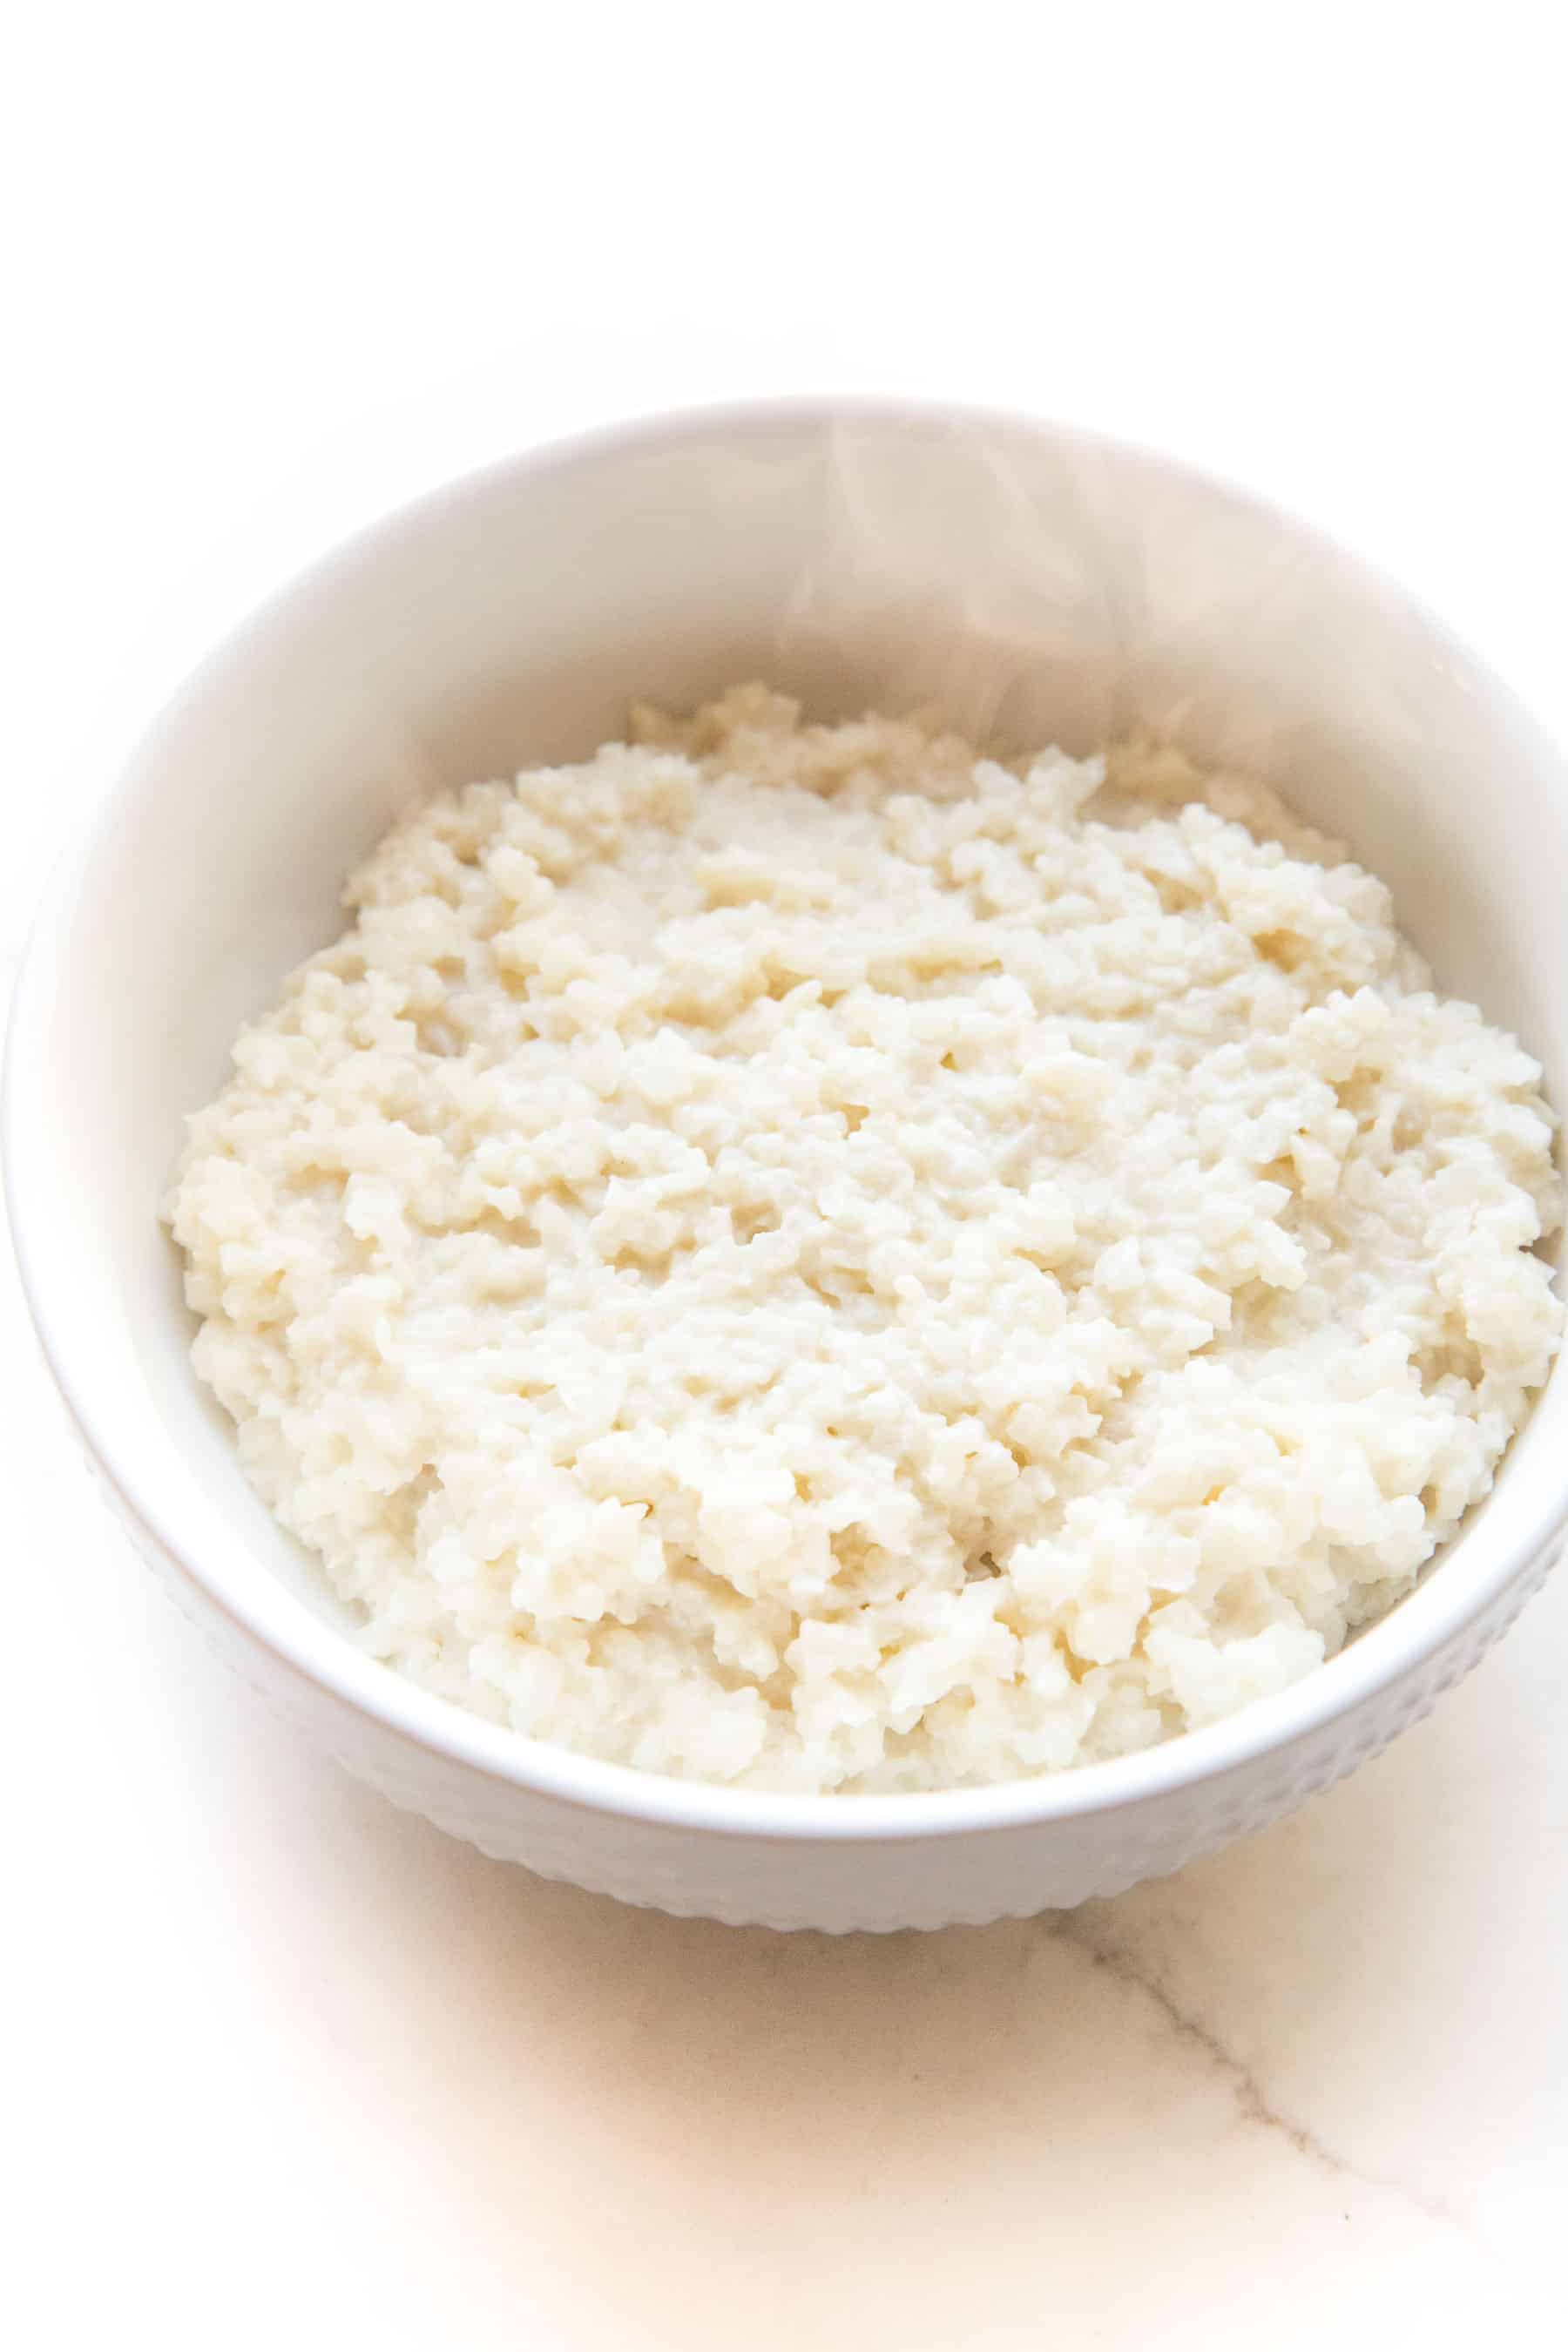 cauliflower rice risotto in a white bowl